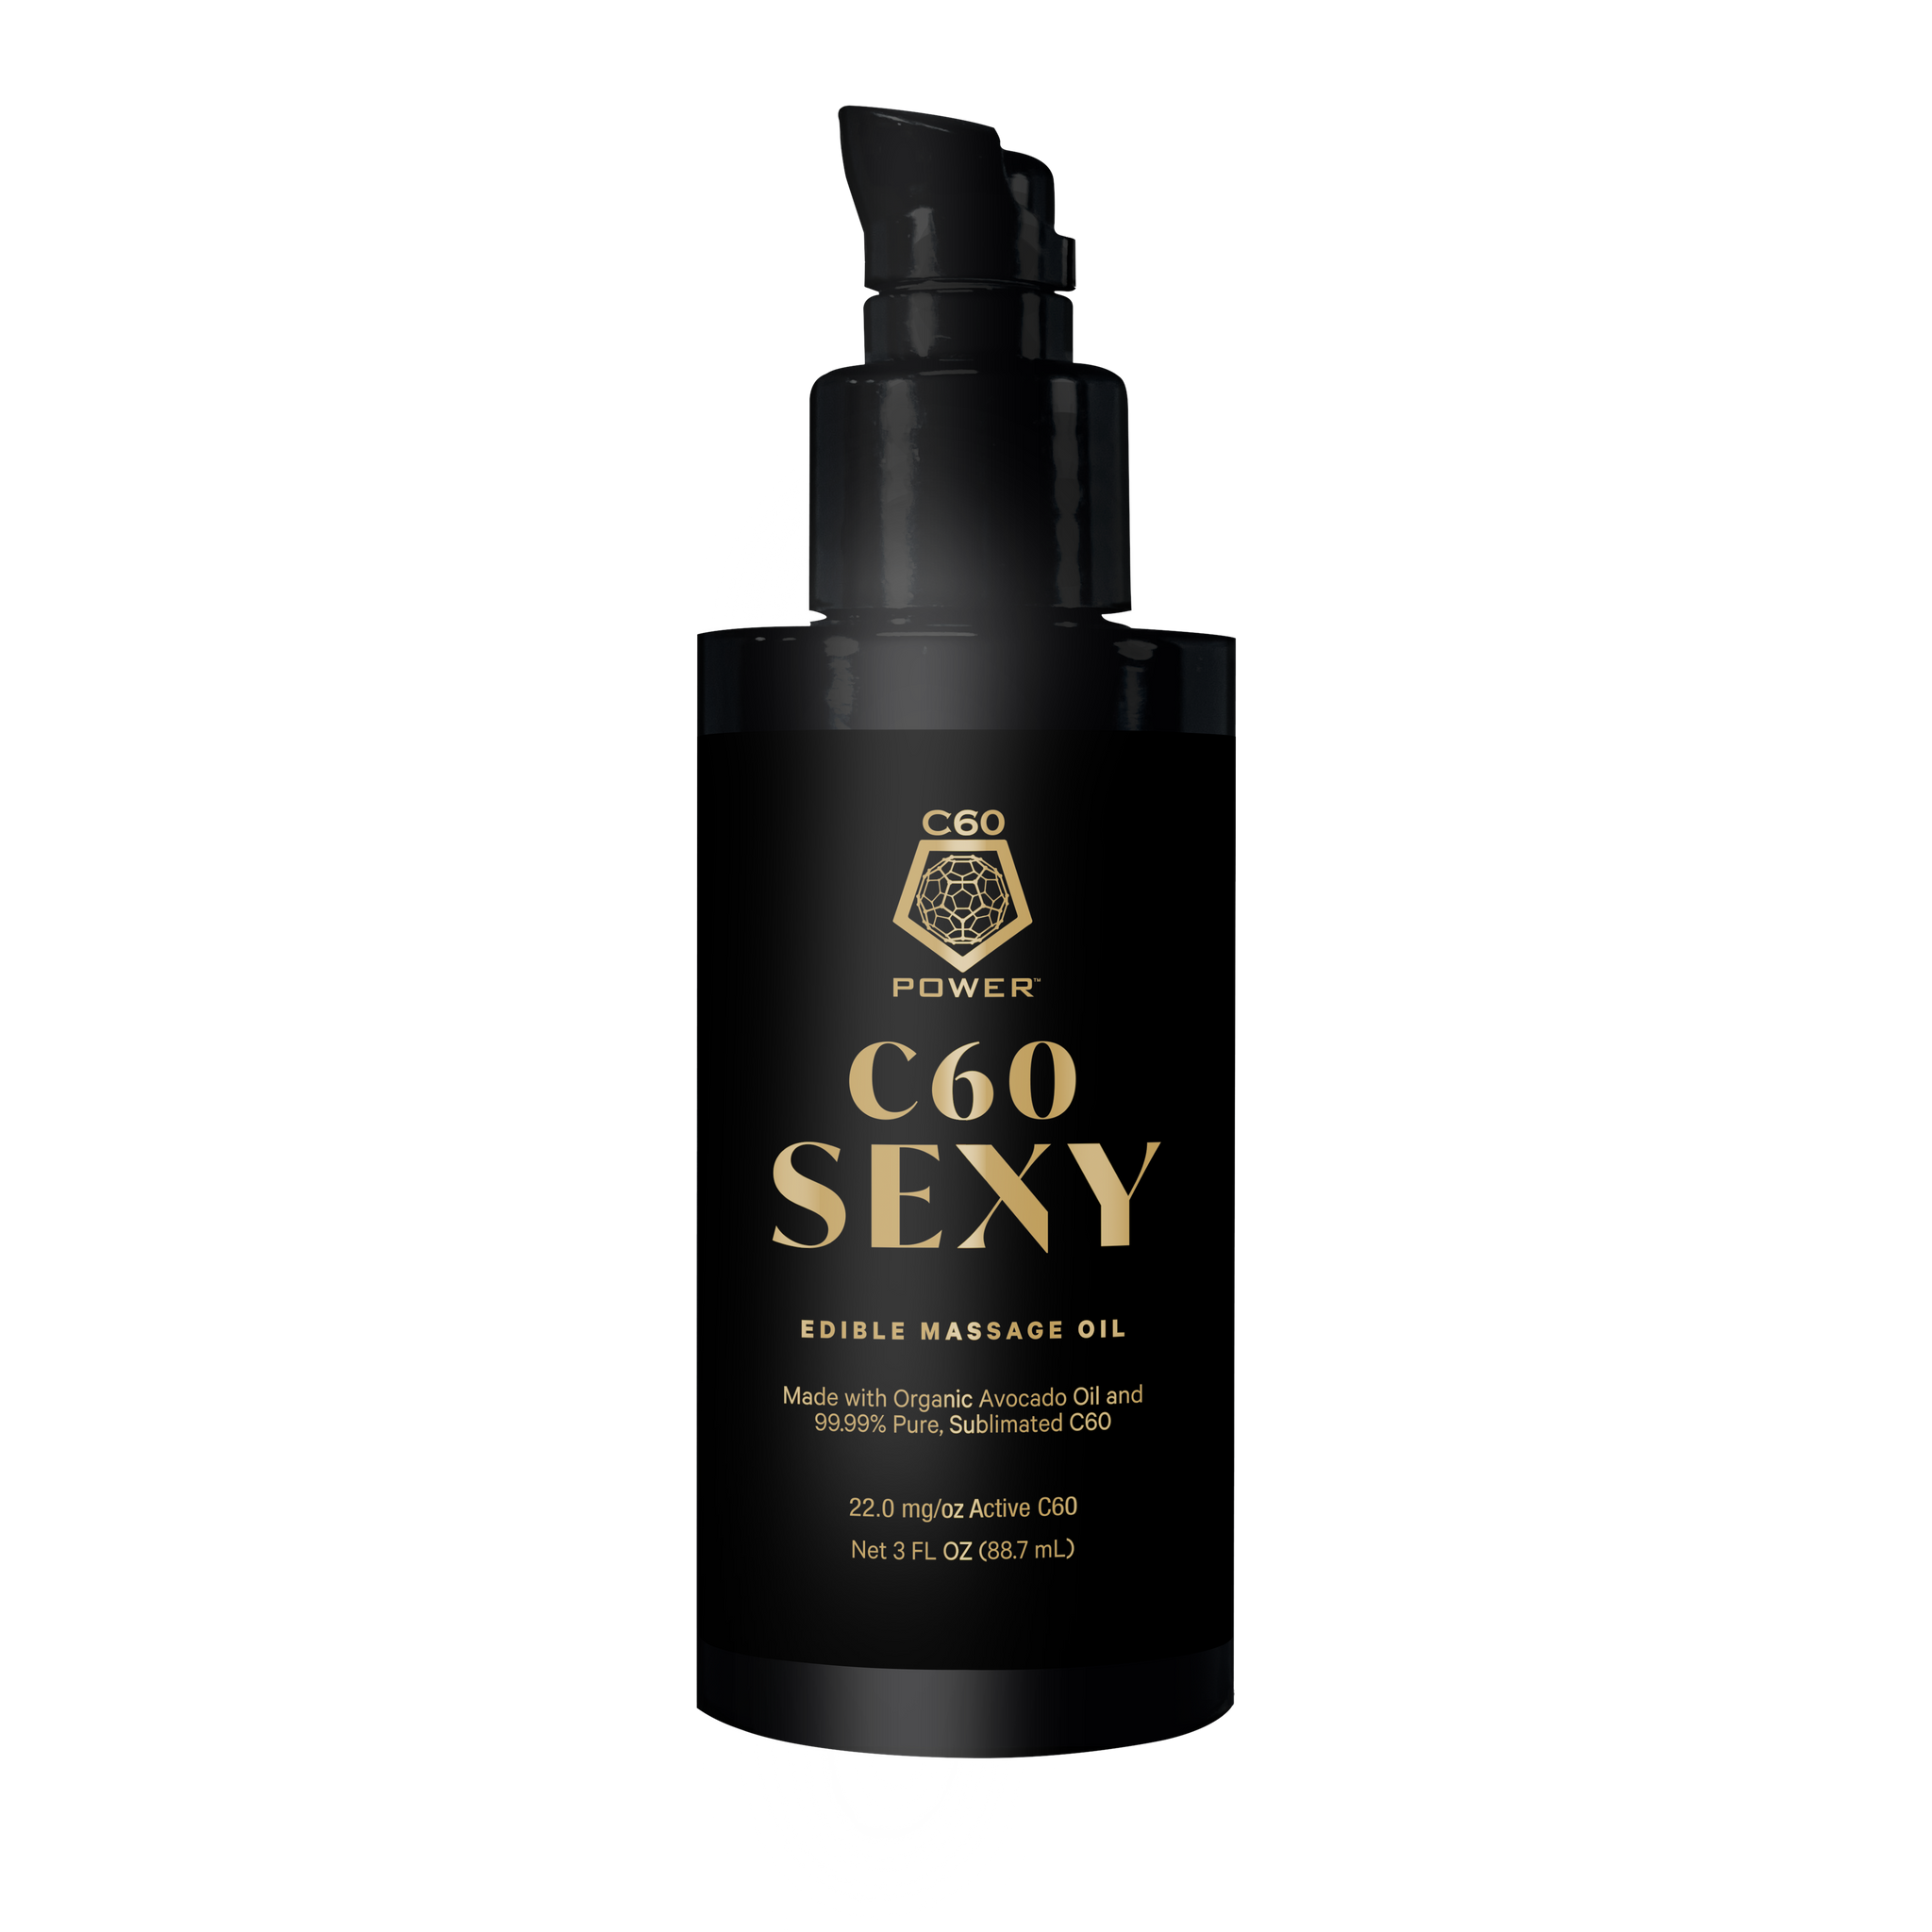 C60 Sexy - Edible Massage Oil